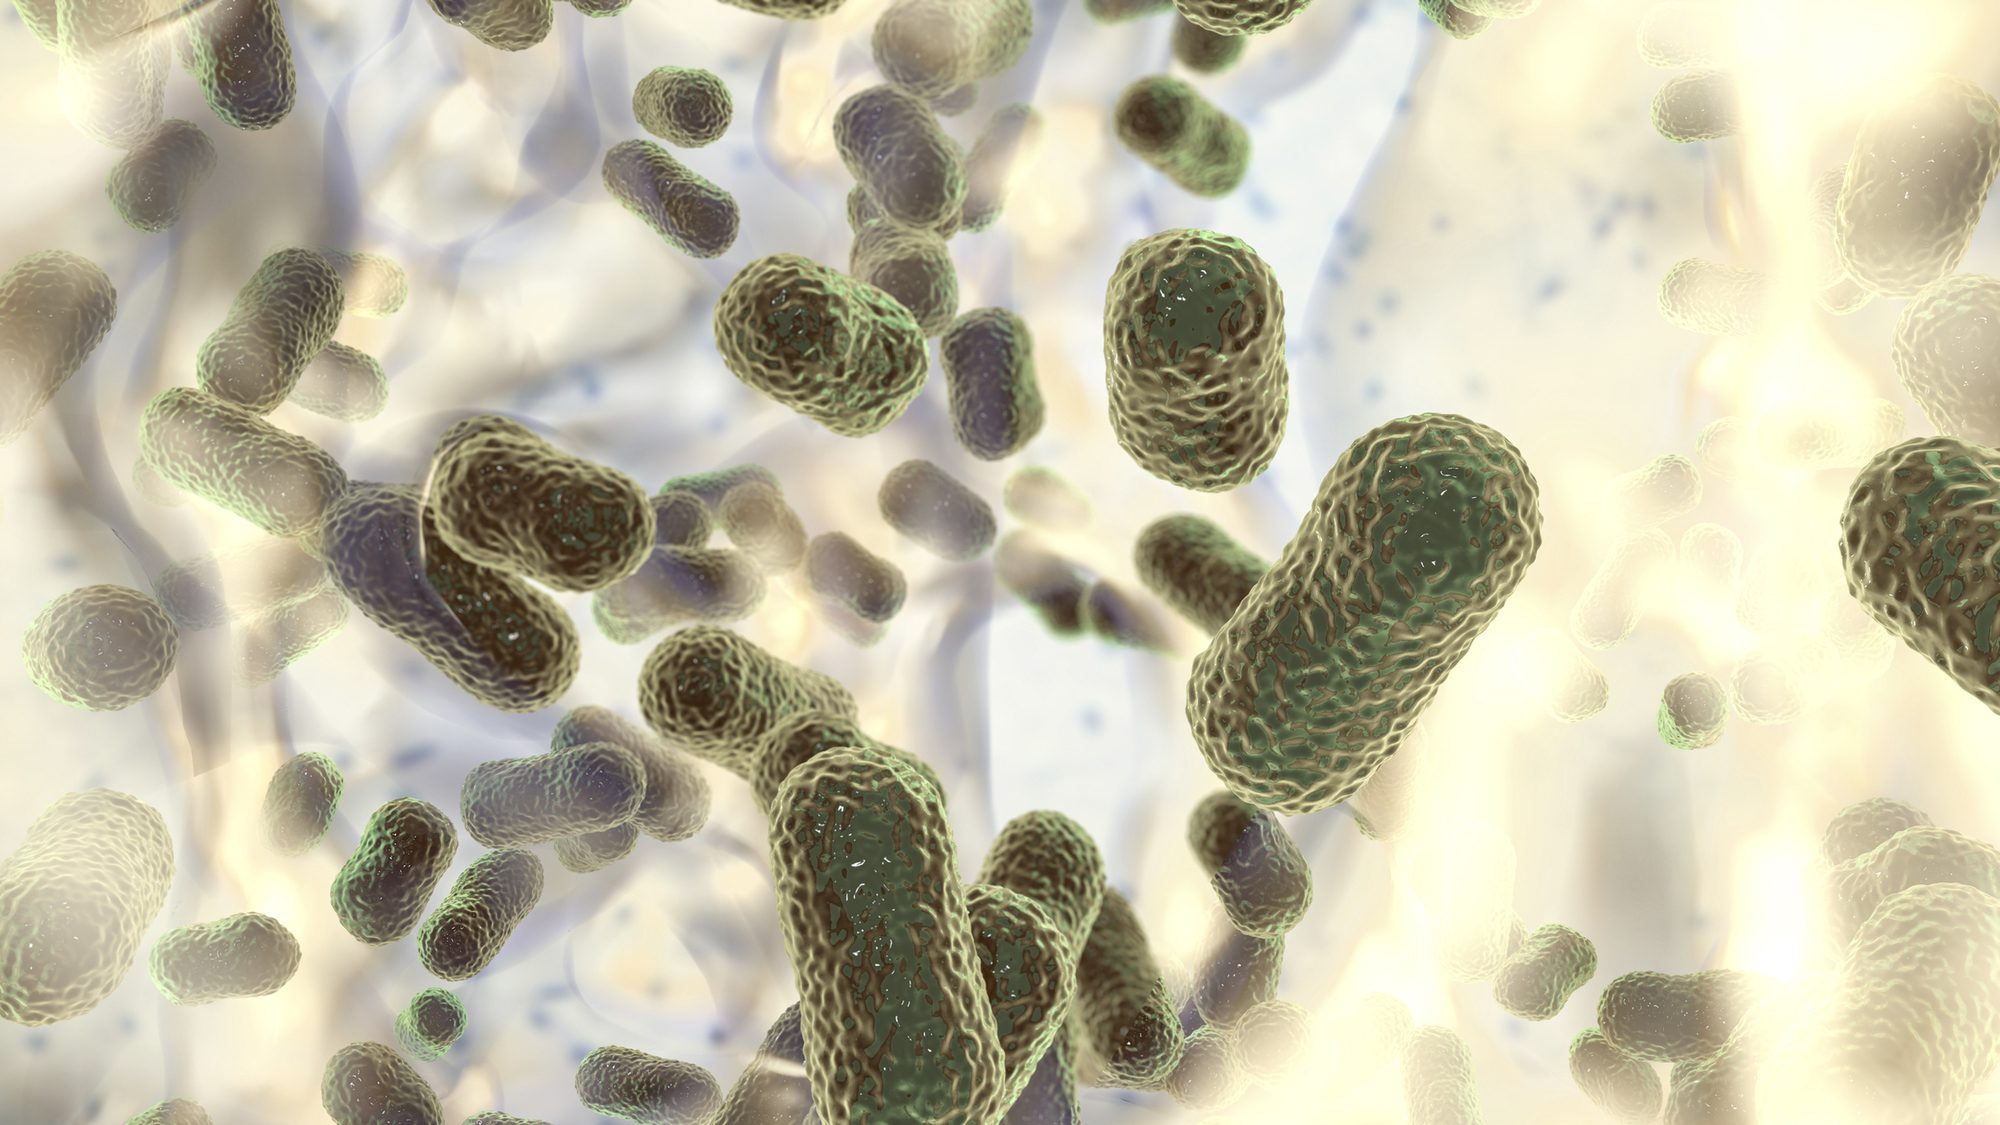 Biofilm of bacteria Acinetobacter baumanni